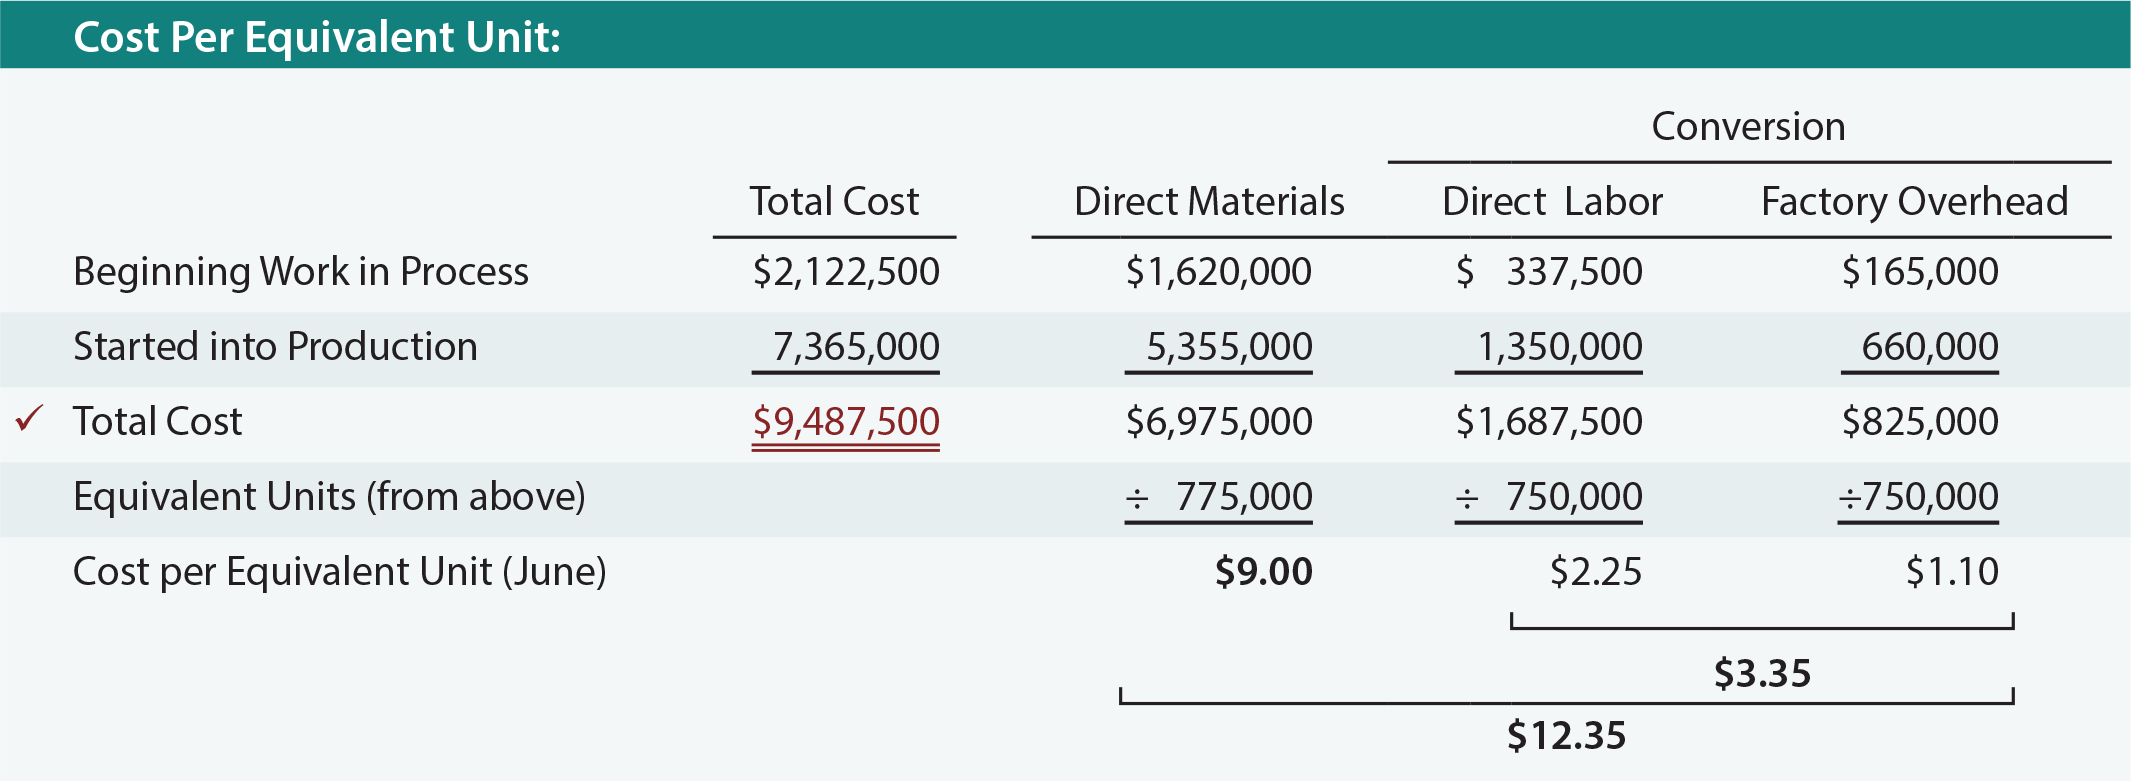 Cost Per Equivalent Unit Schedule